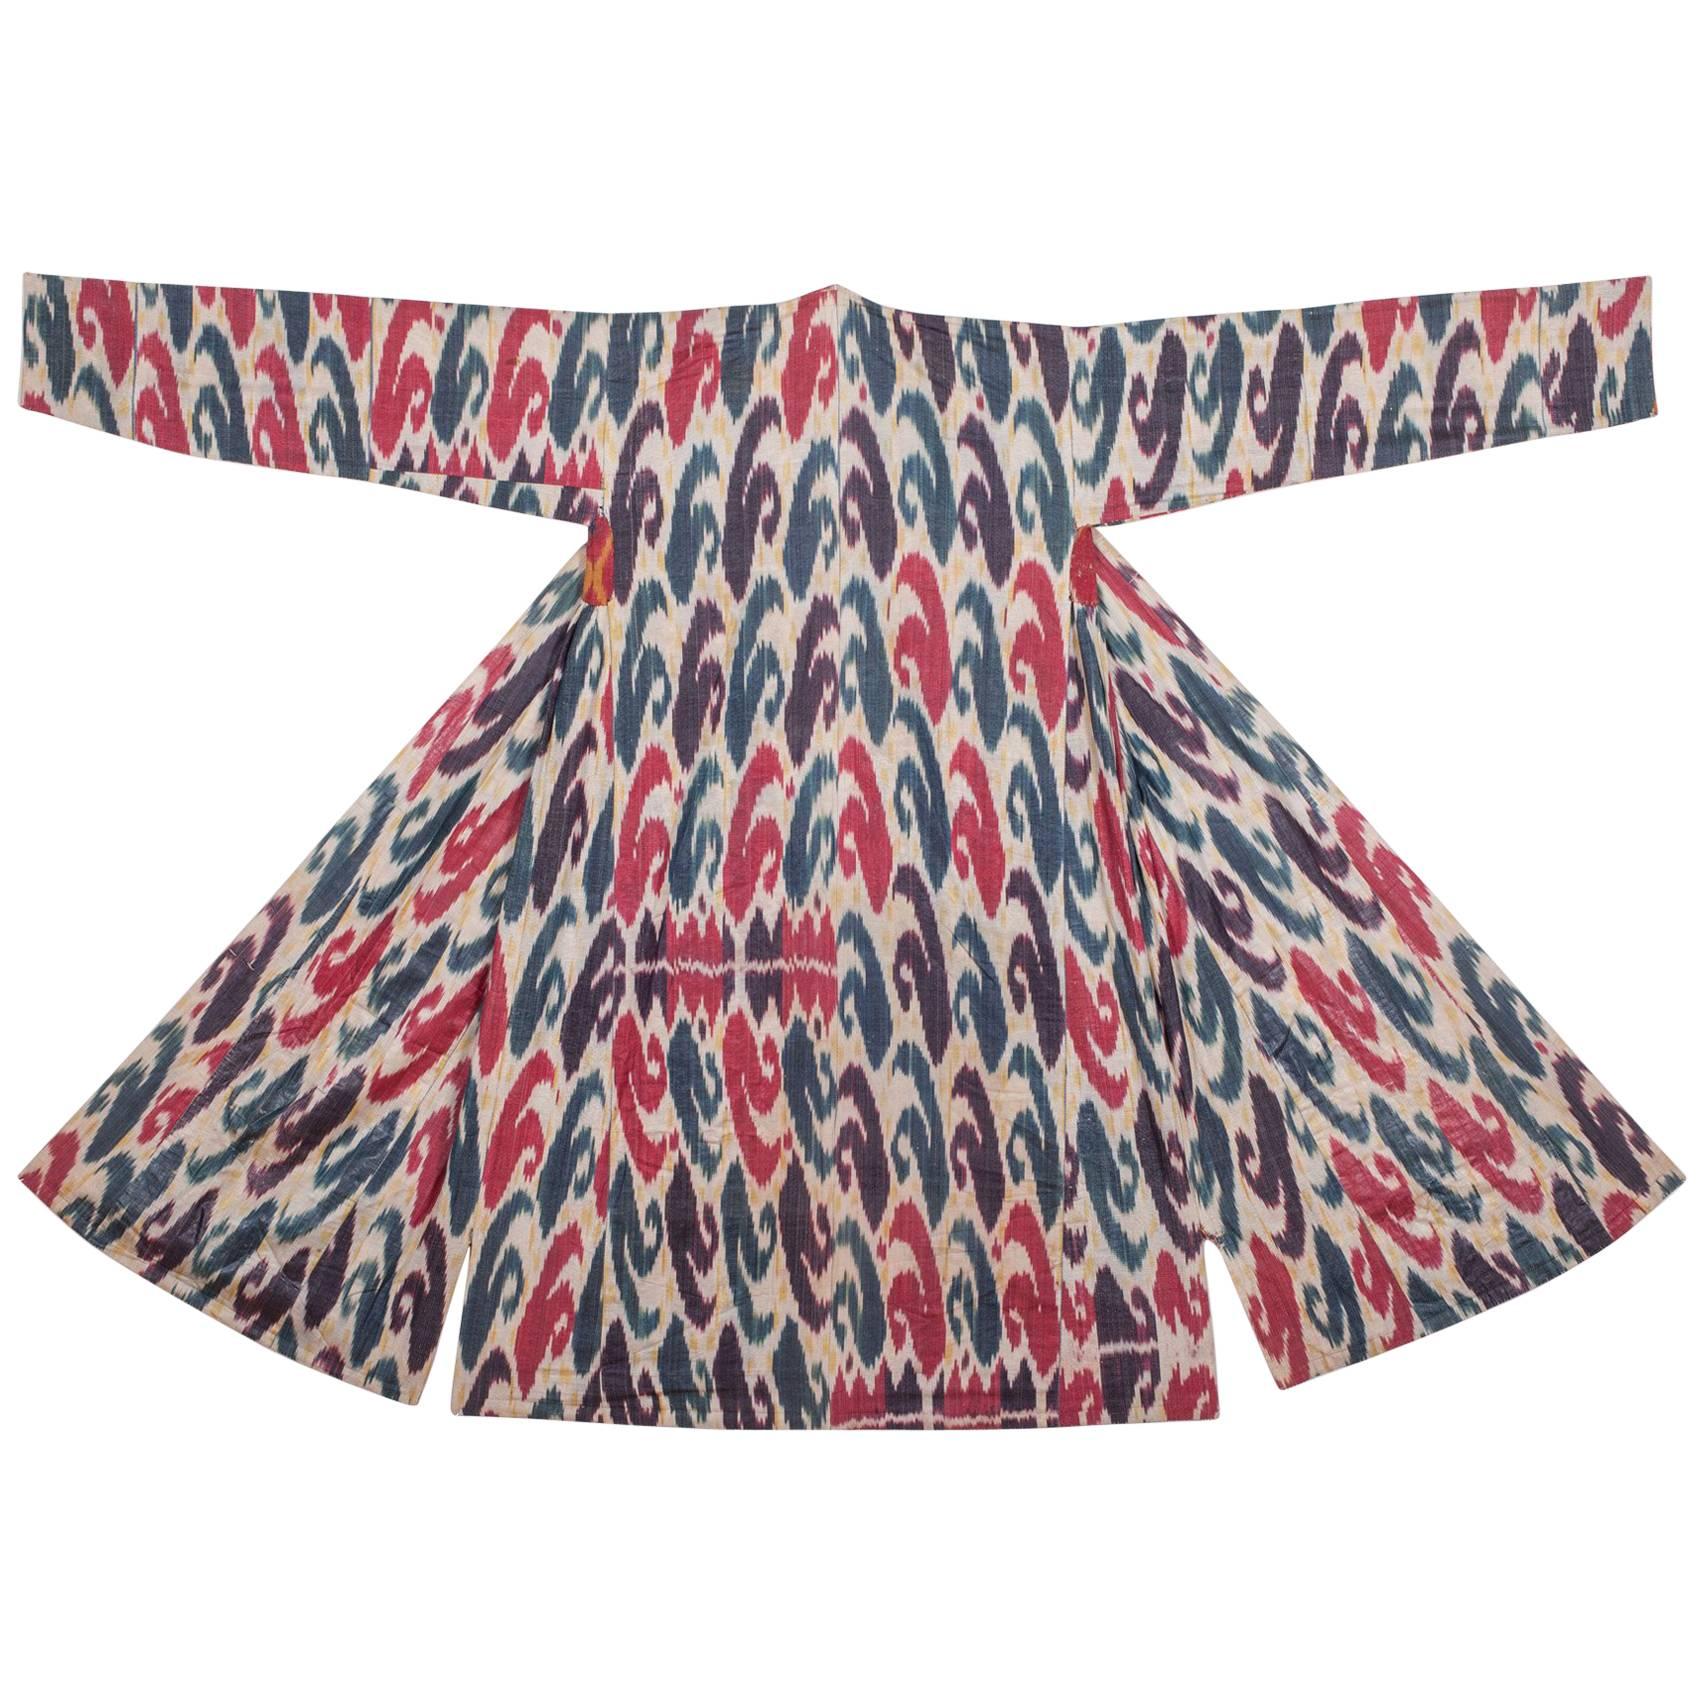 19th Century Silk and Cotton ‘Adras’ Chapan / Coat from Bukhara Uzbekistan